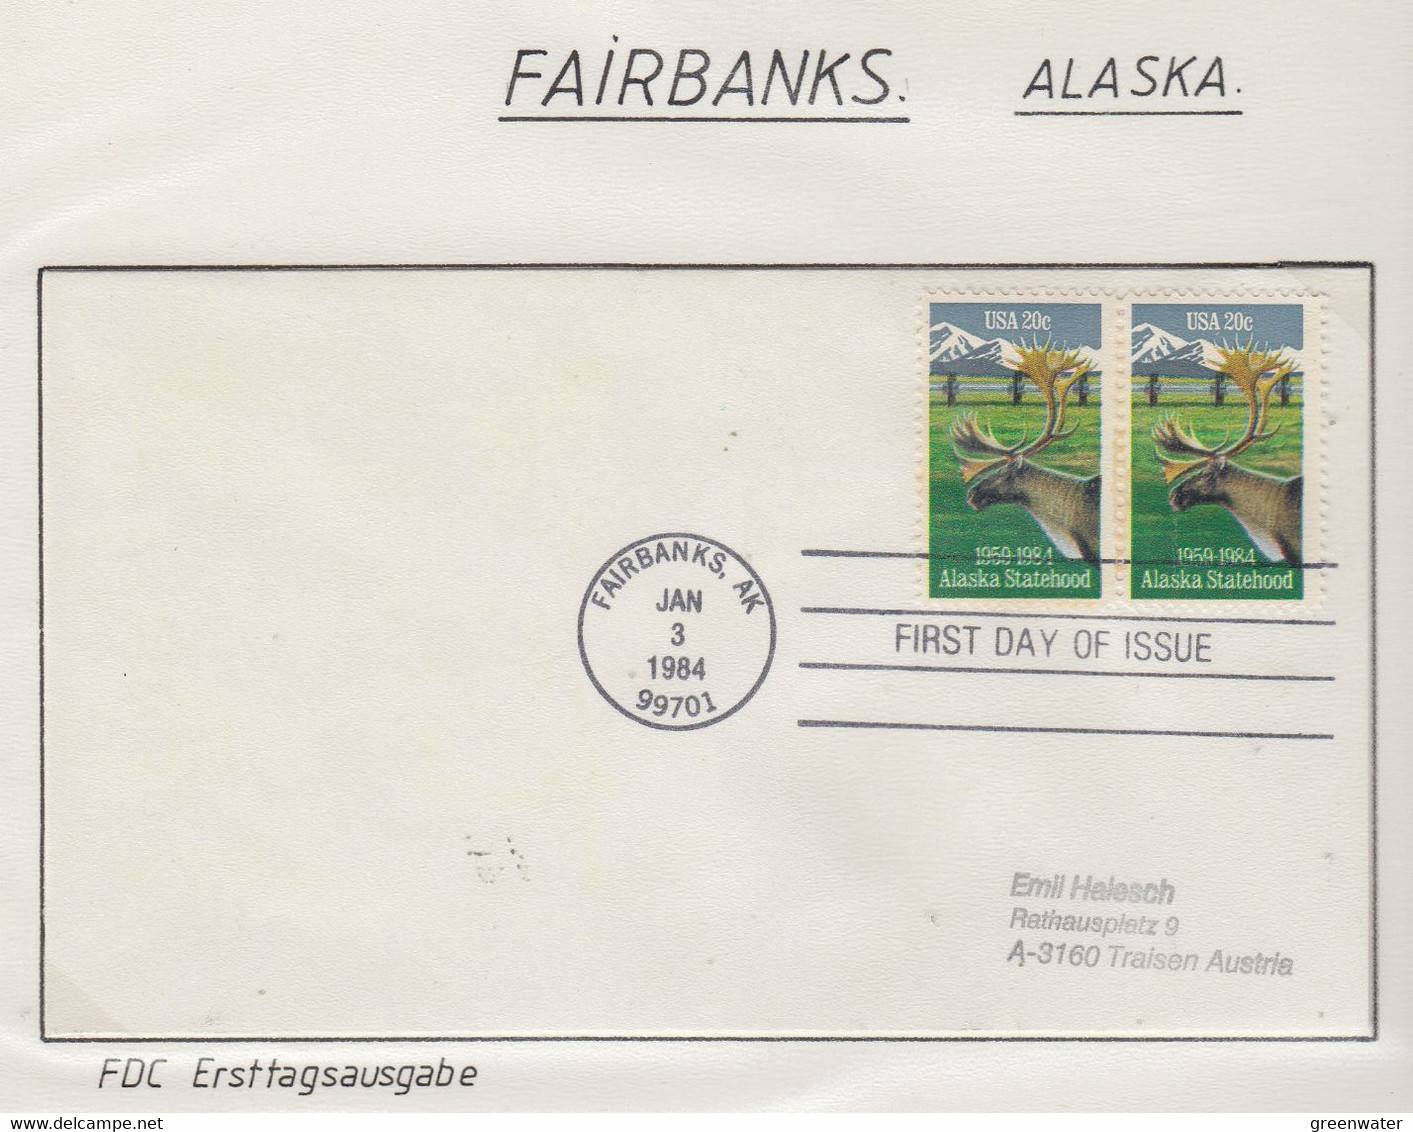 USA 1984 Alaska Statehood 2v (pair) FDC Ca Fairbanks Jan 3 1984 (FB160) - 1981-1990